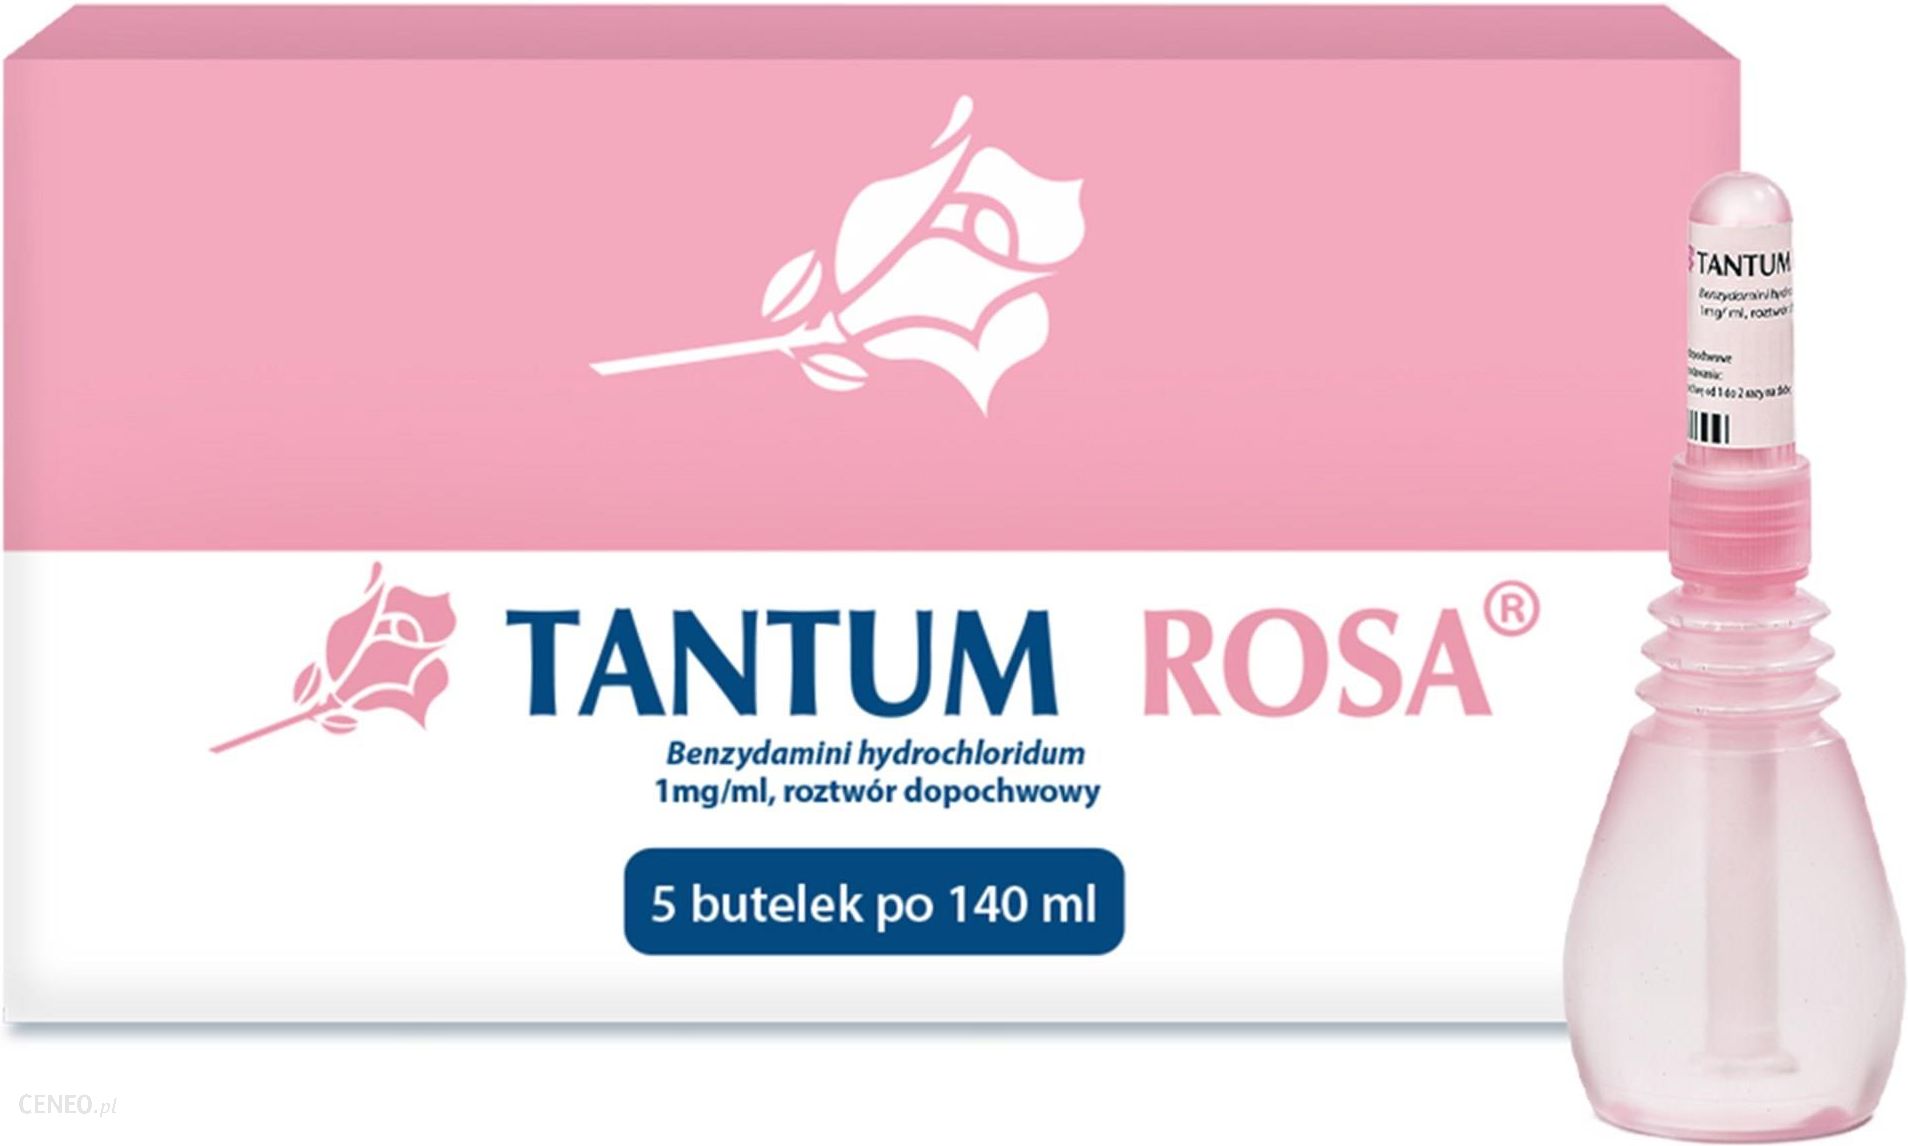 Tantum Rosa 5 butelek po 140ml - Opinie i ceny na Ceneo.pl